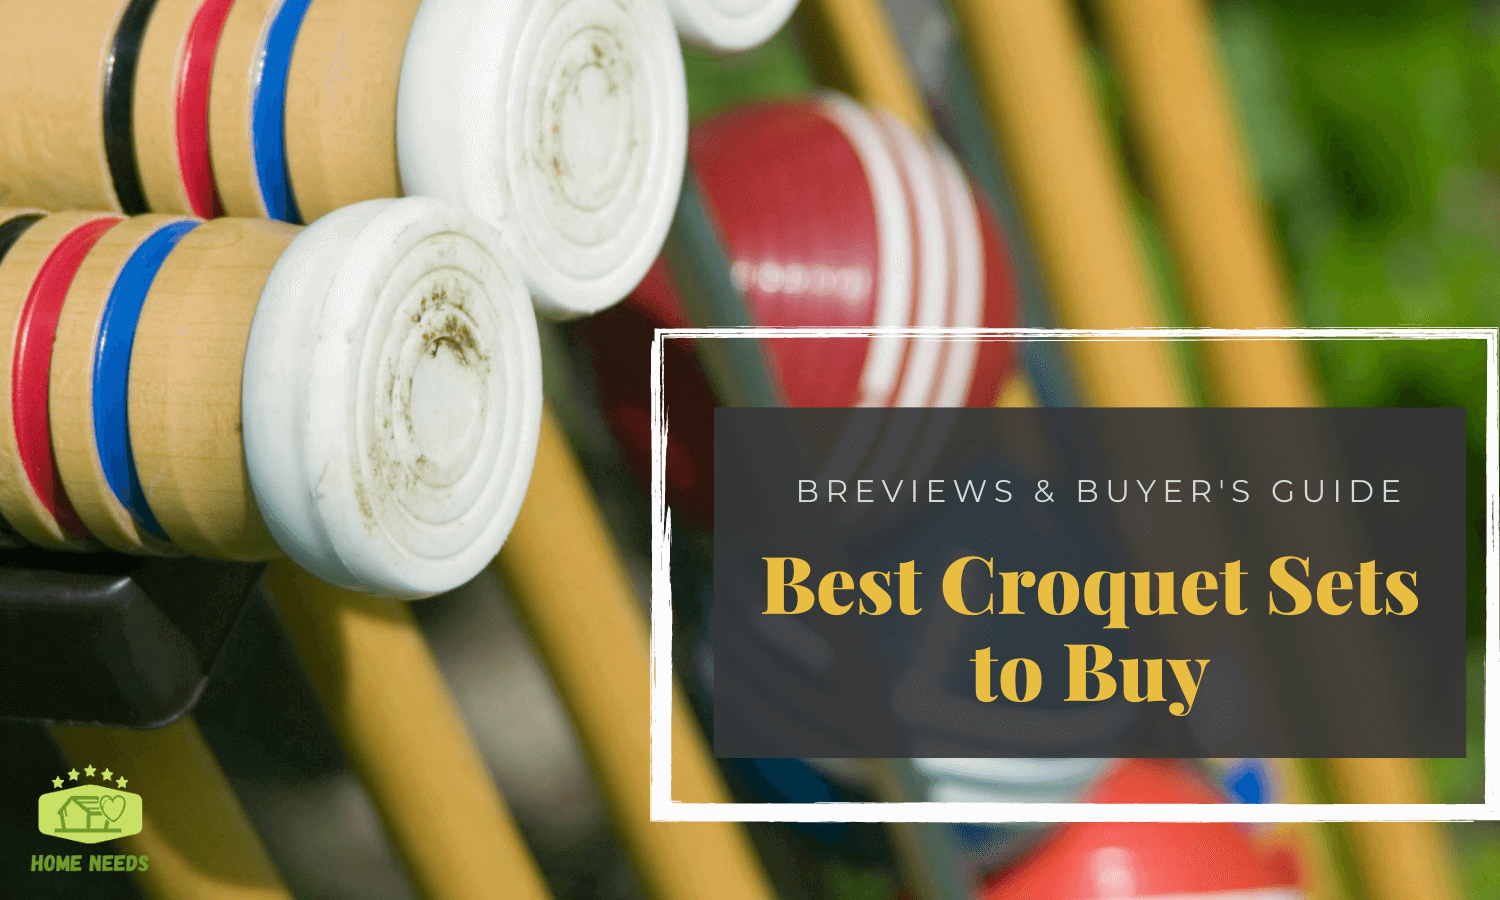 Best Croquet Sets